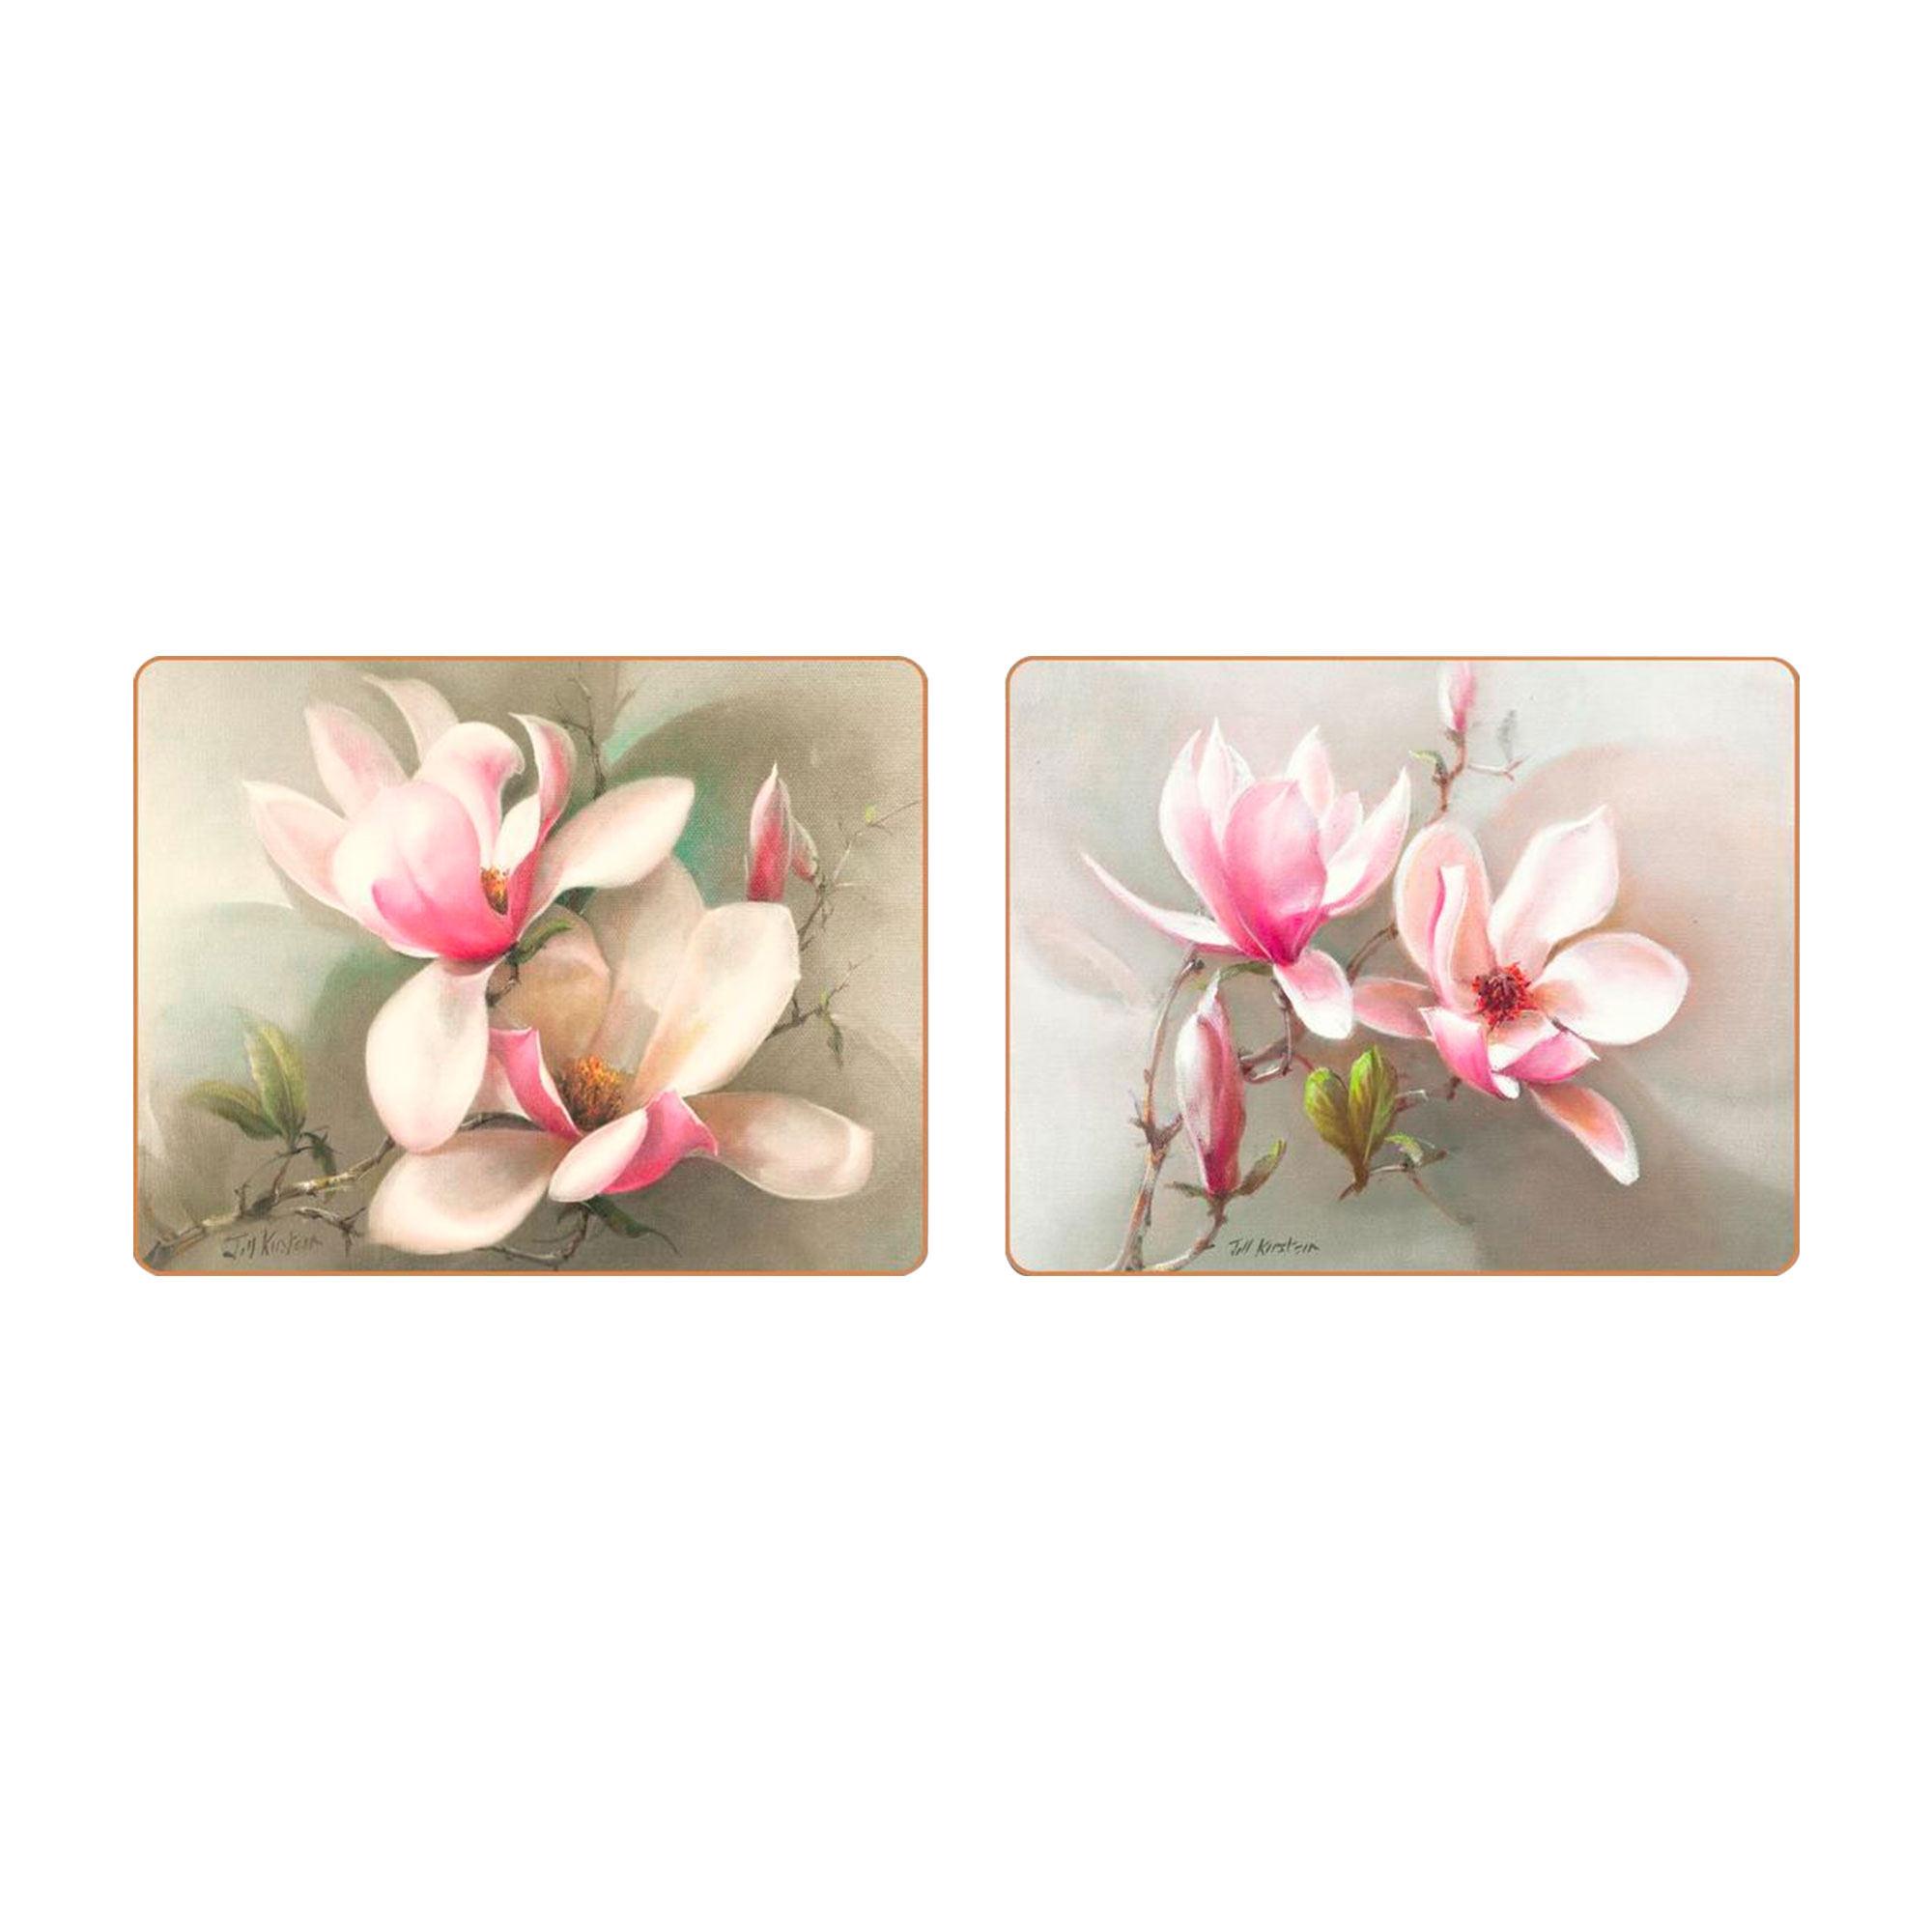 Cinnamon Rectangular Placemat Set of 6 Magnolias Image 4